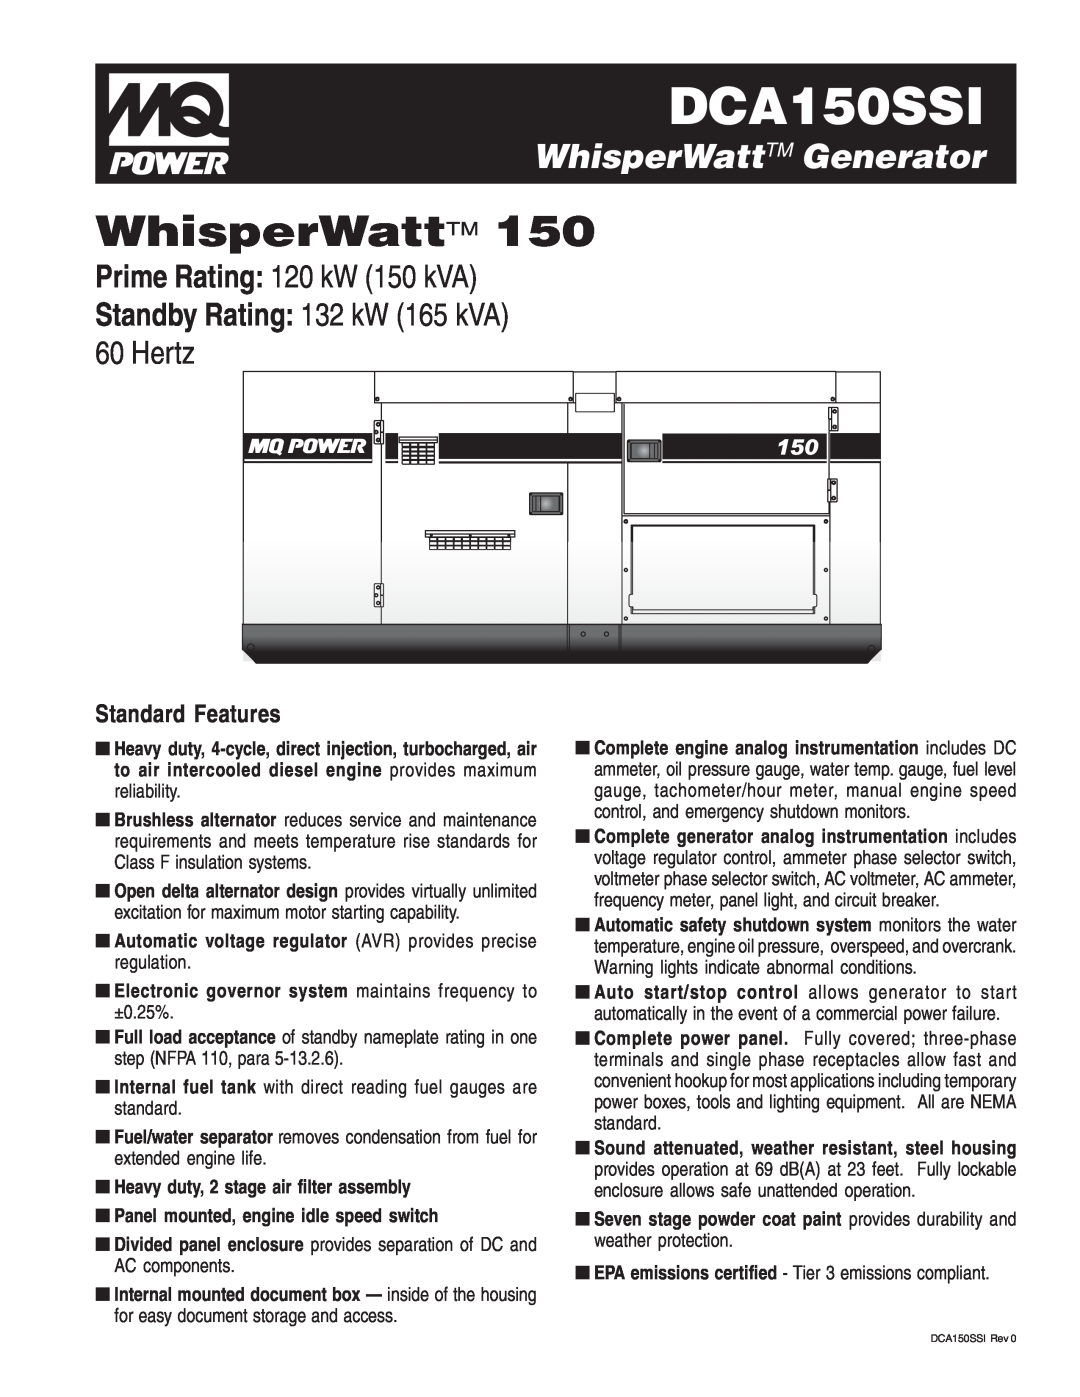 Multiquip DCA150SSI manual WhisperWattTM Generator, Standard Features, Prime Rating 120 kW 150 kVA, Hertz 